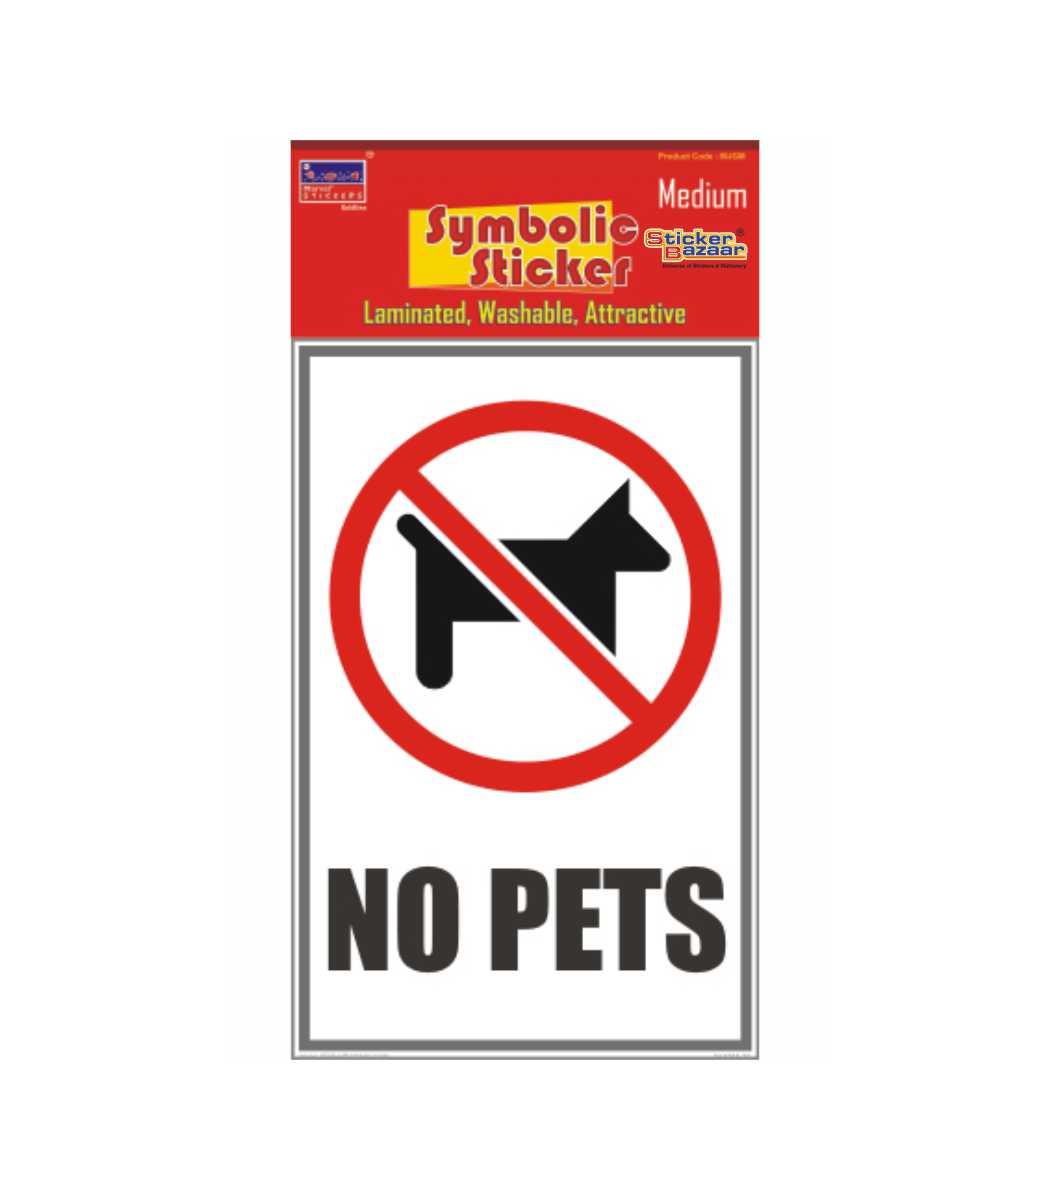 No Pets Medium Symbolic Sticker